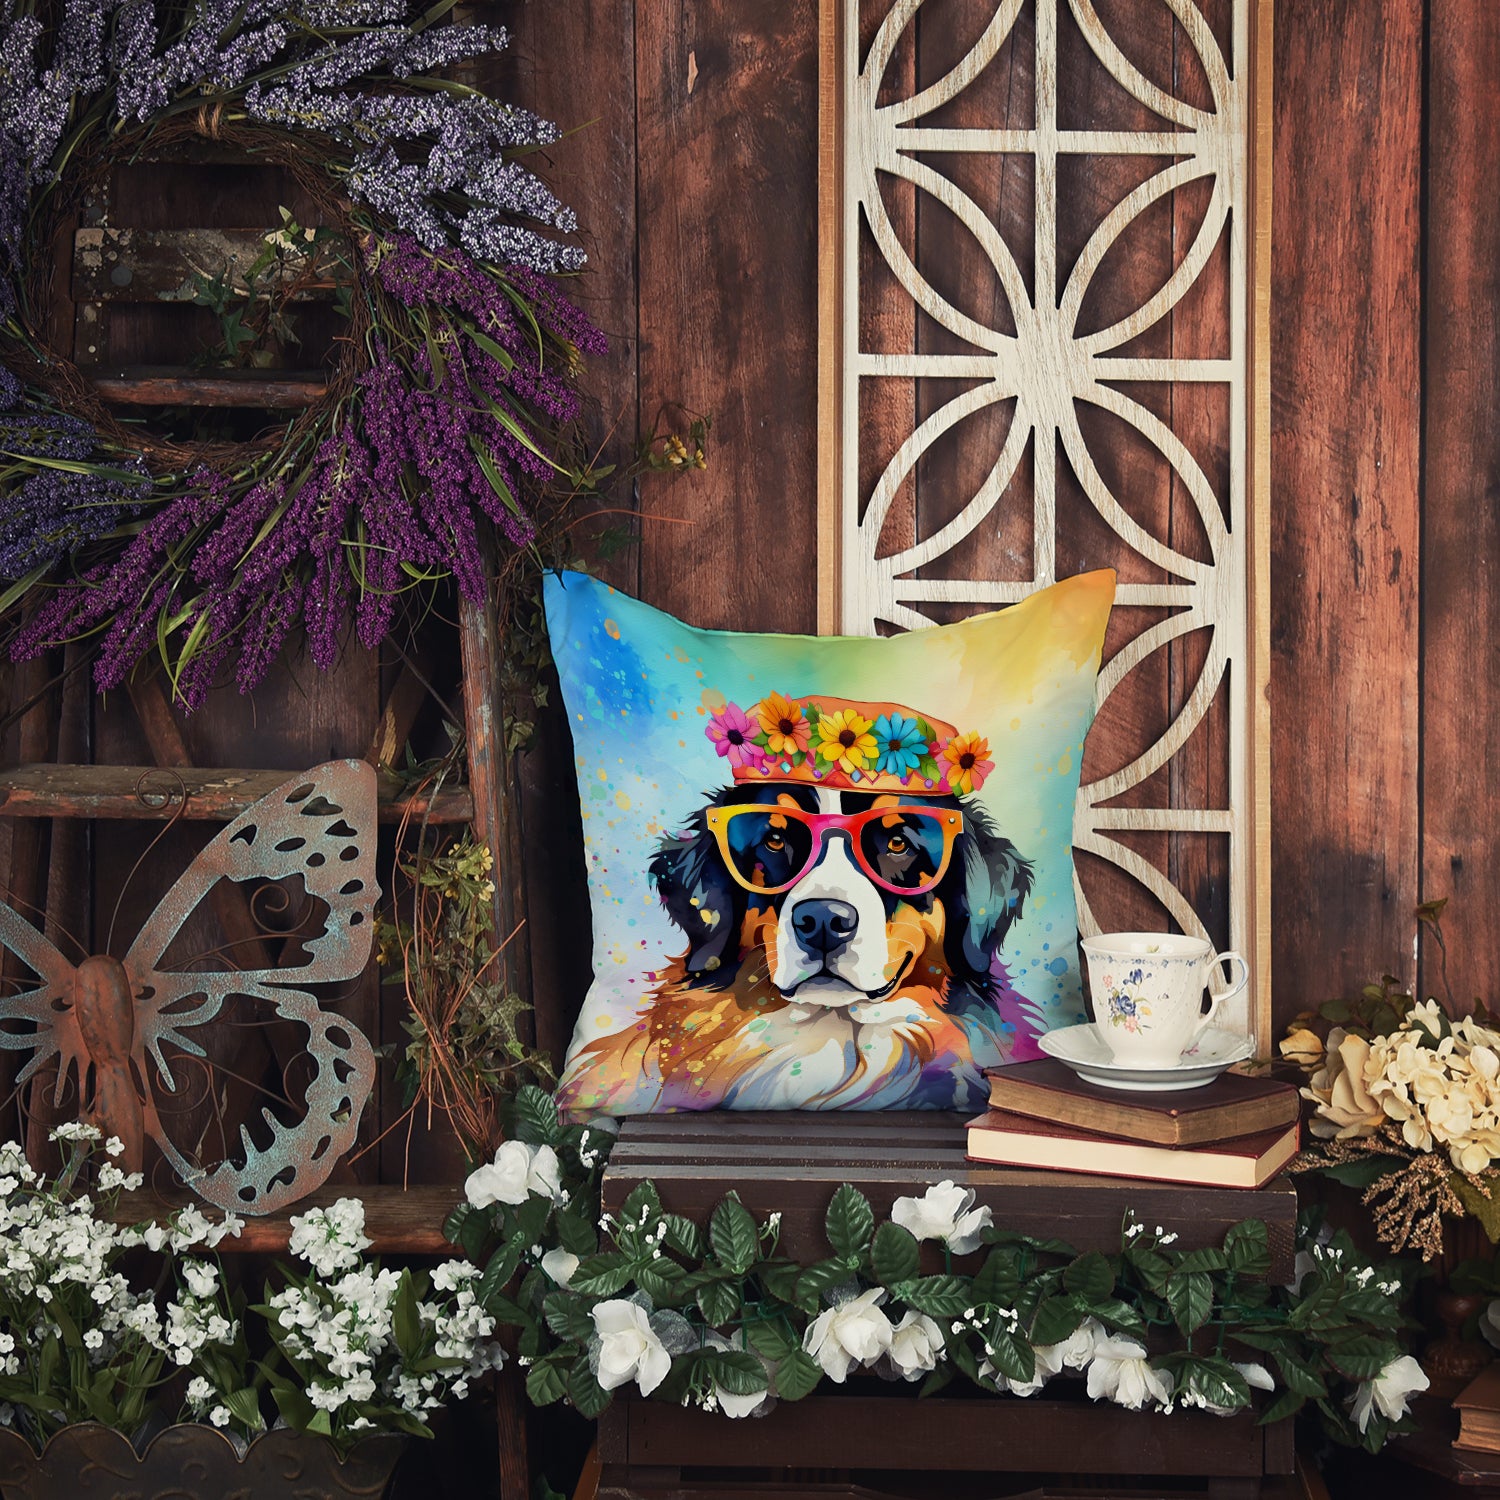 Bernese Mountain Dog Hippie Dawg Fabric Decorative Pillow